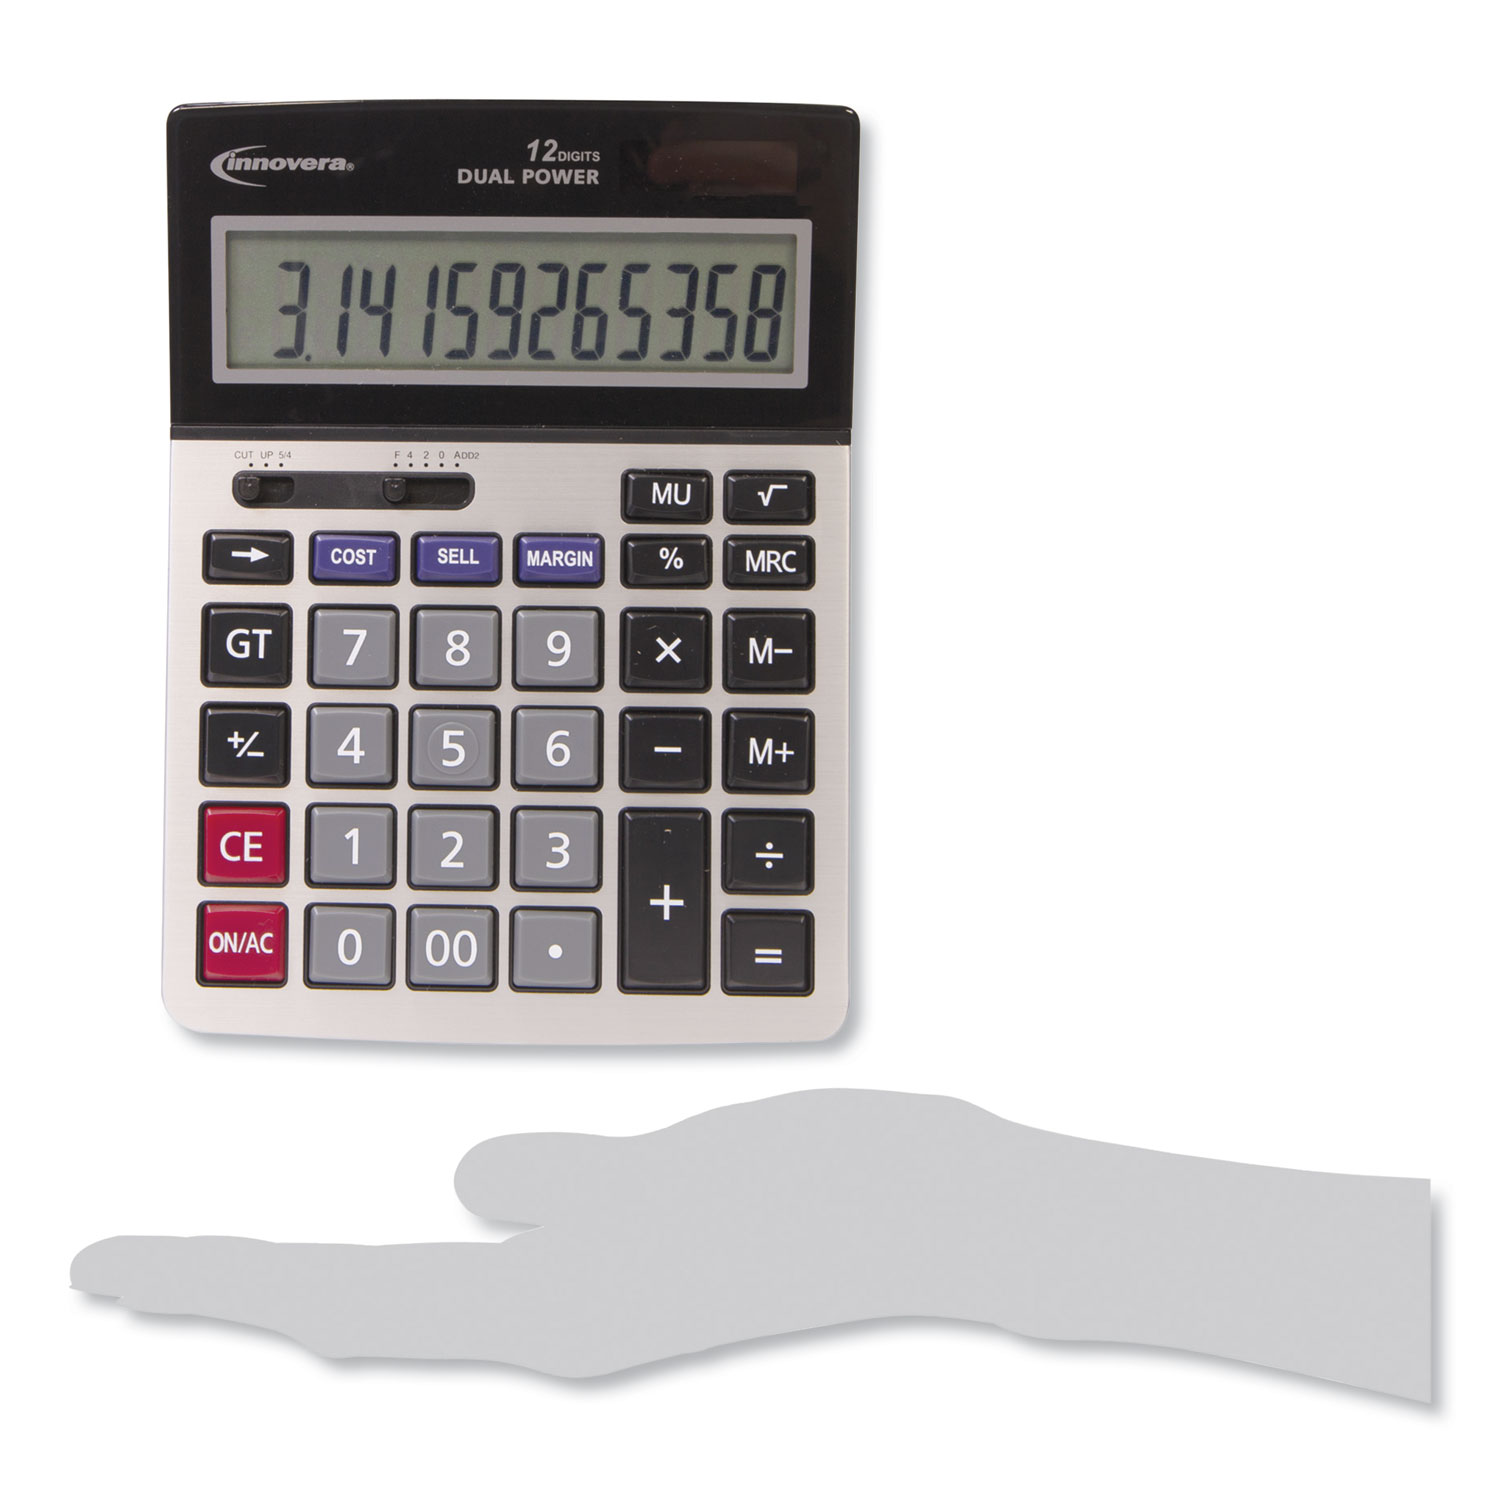 15968 Profit Analyzer Calculator, Dual Power, 12-Digit LCD Display